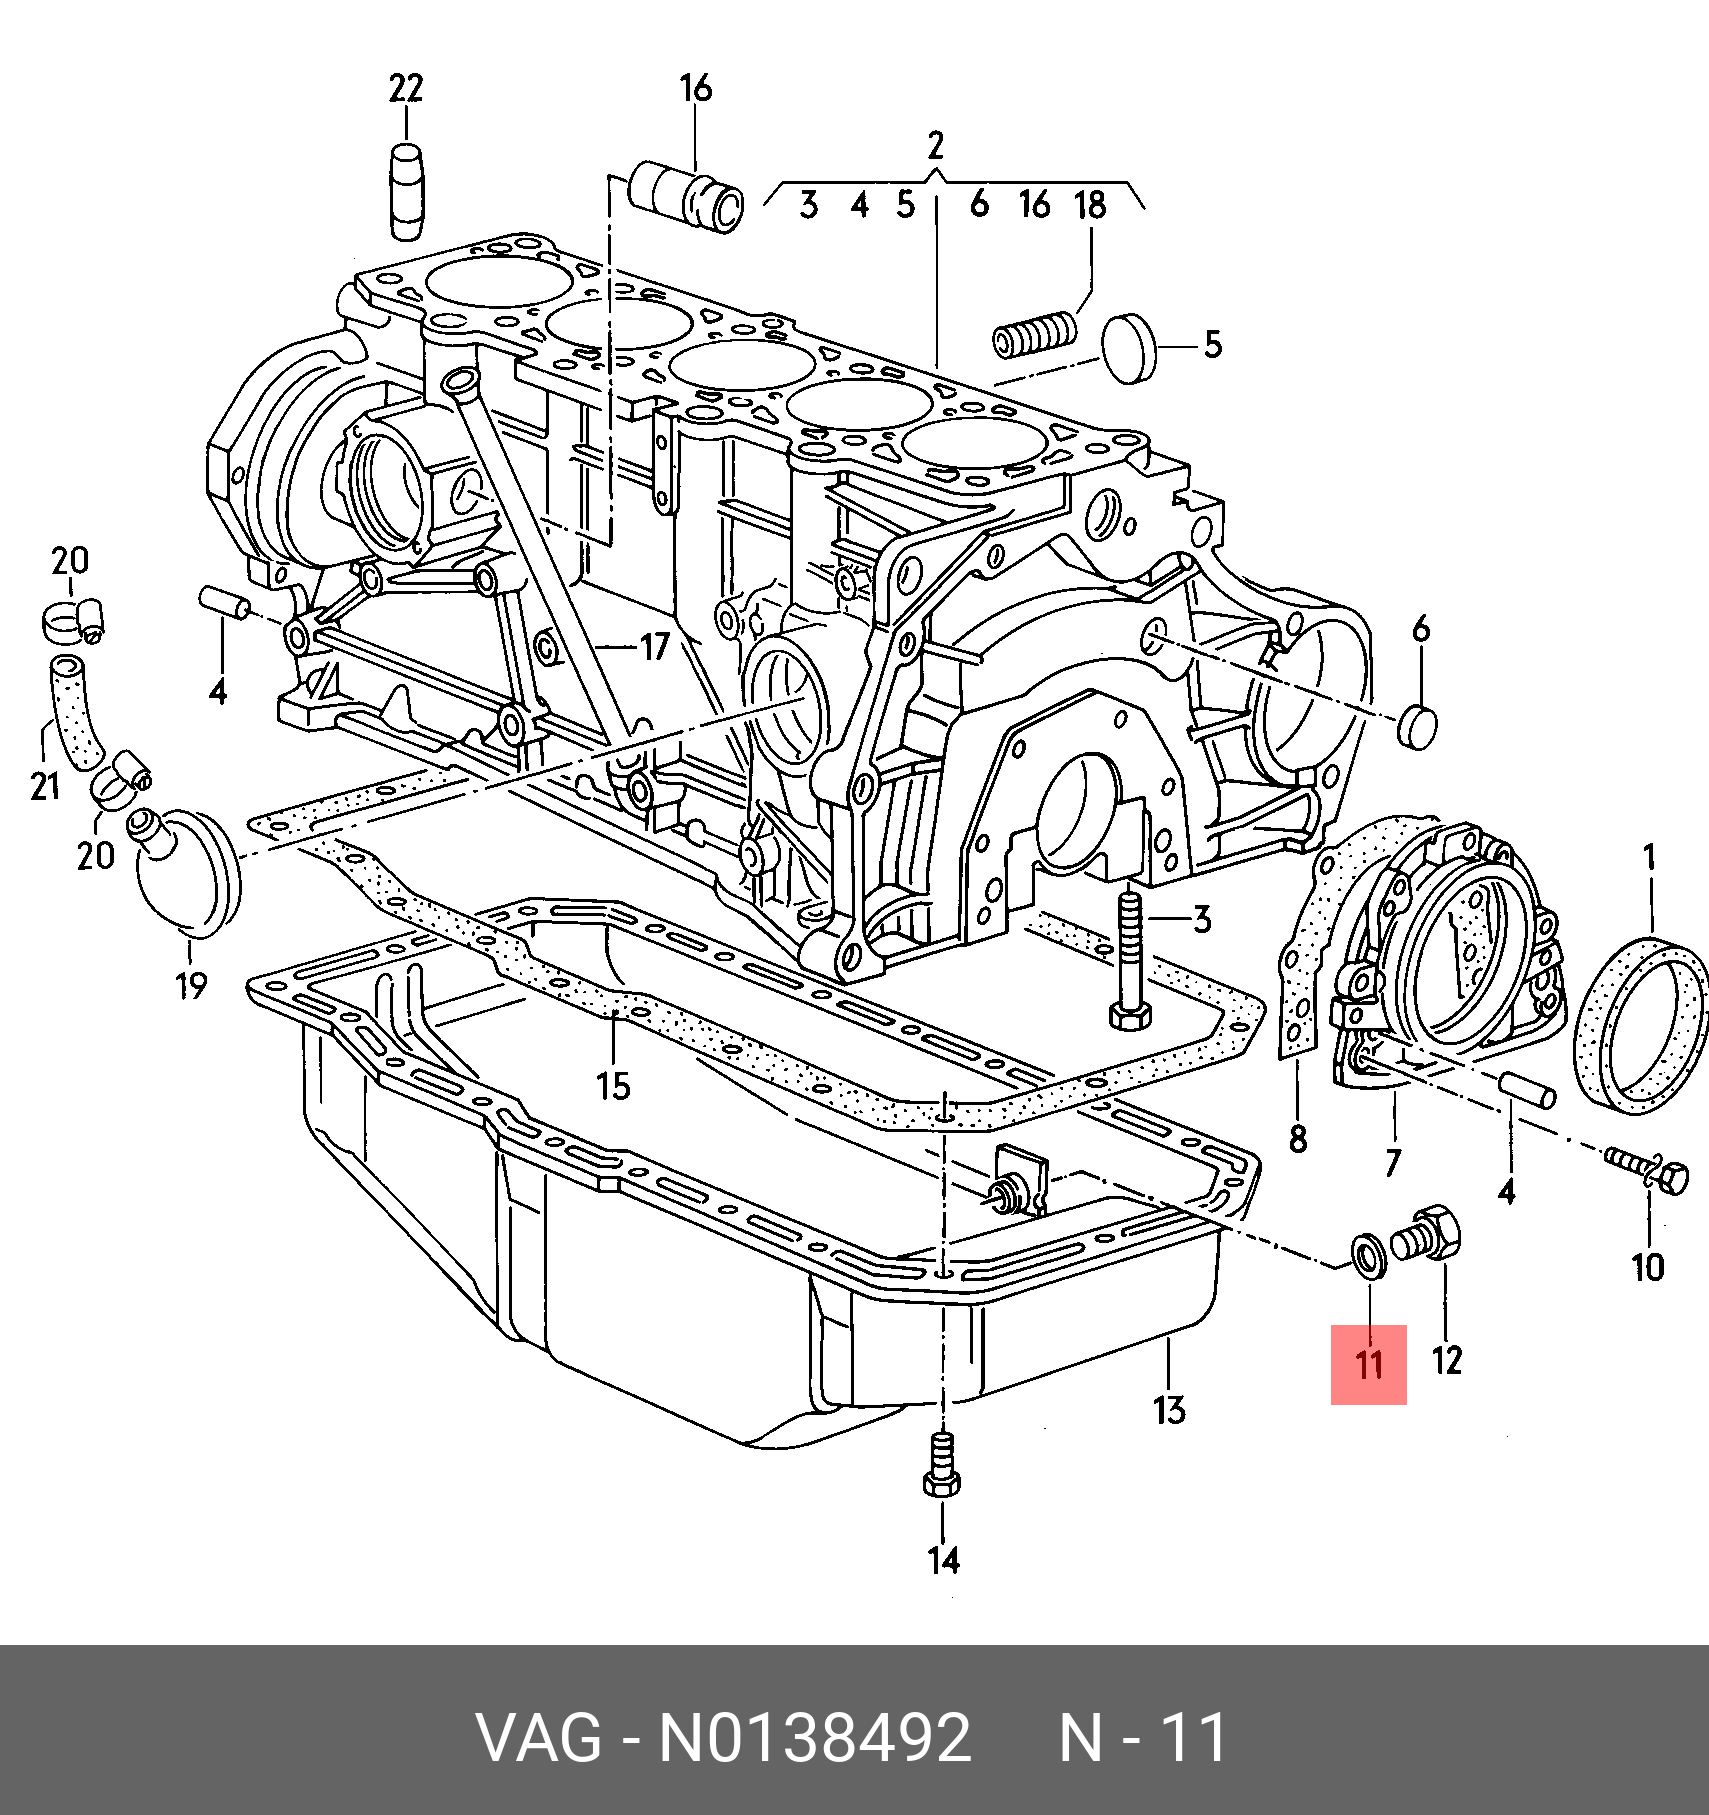 Прокладка сливной пробки поддона двигателя   VAG арт. N 013 84 92